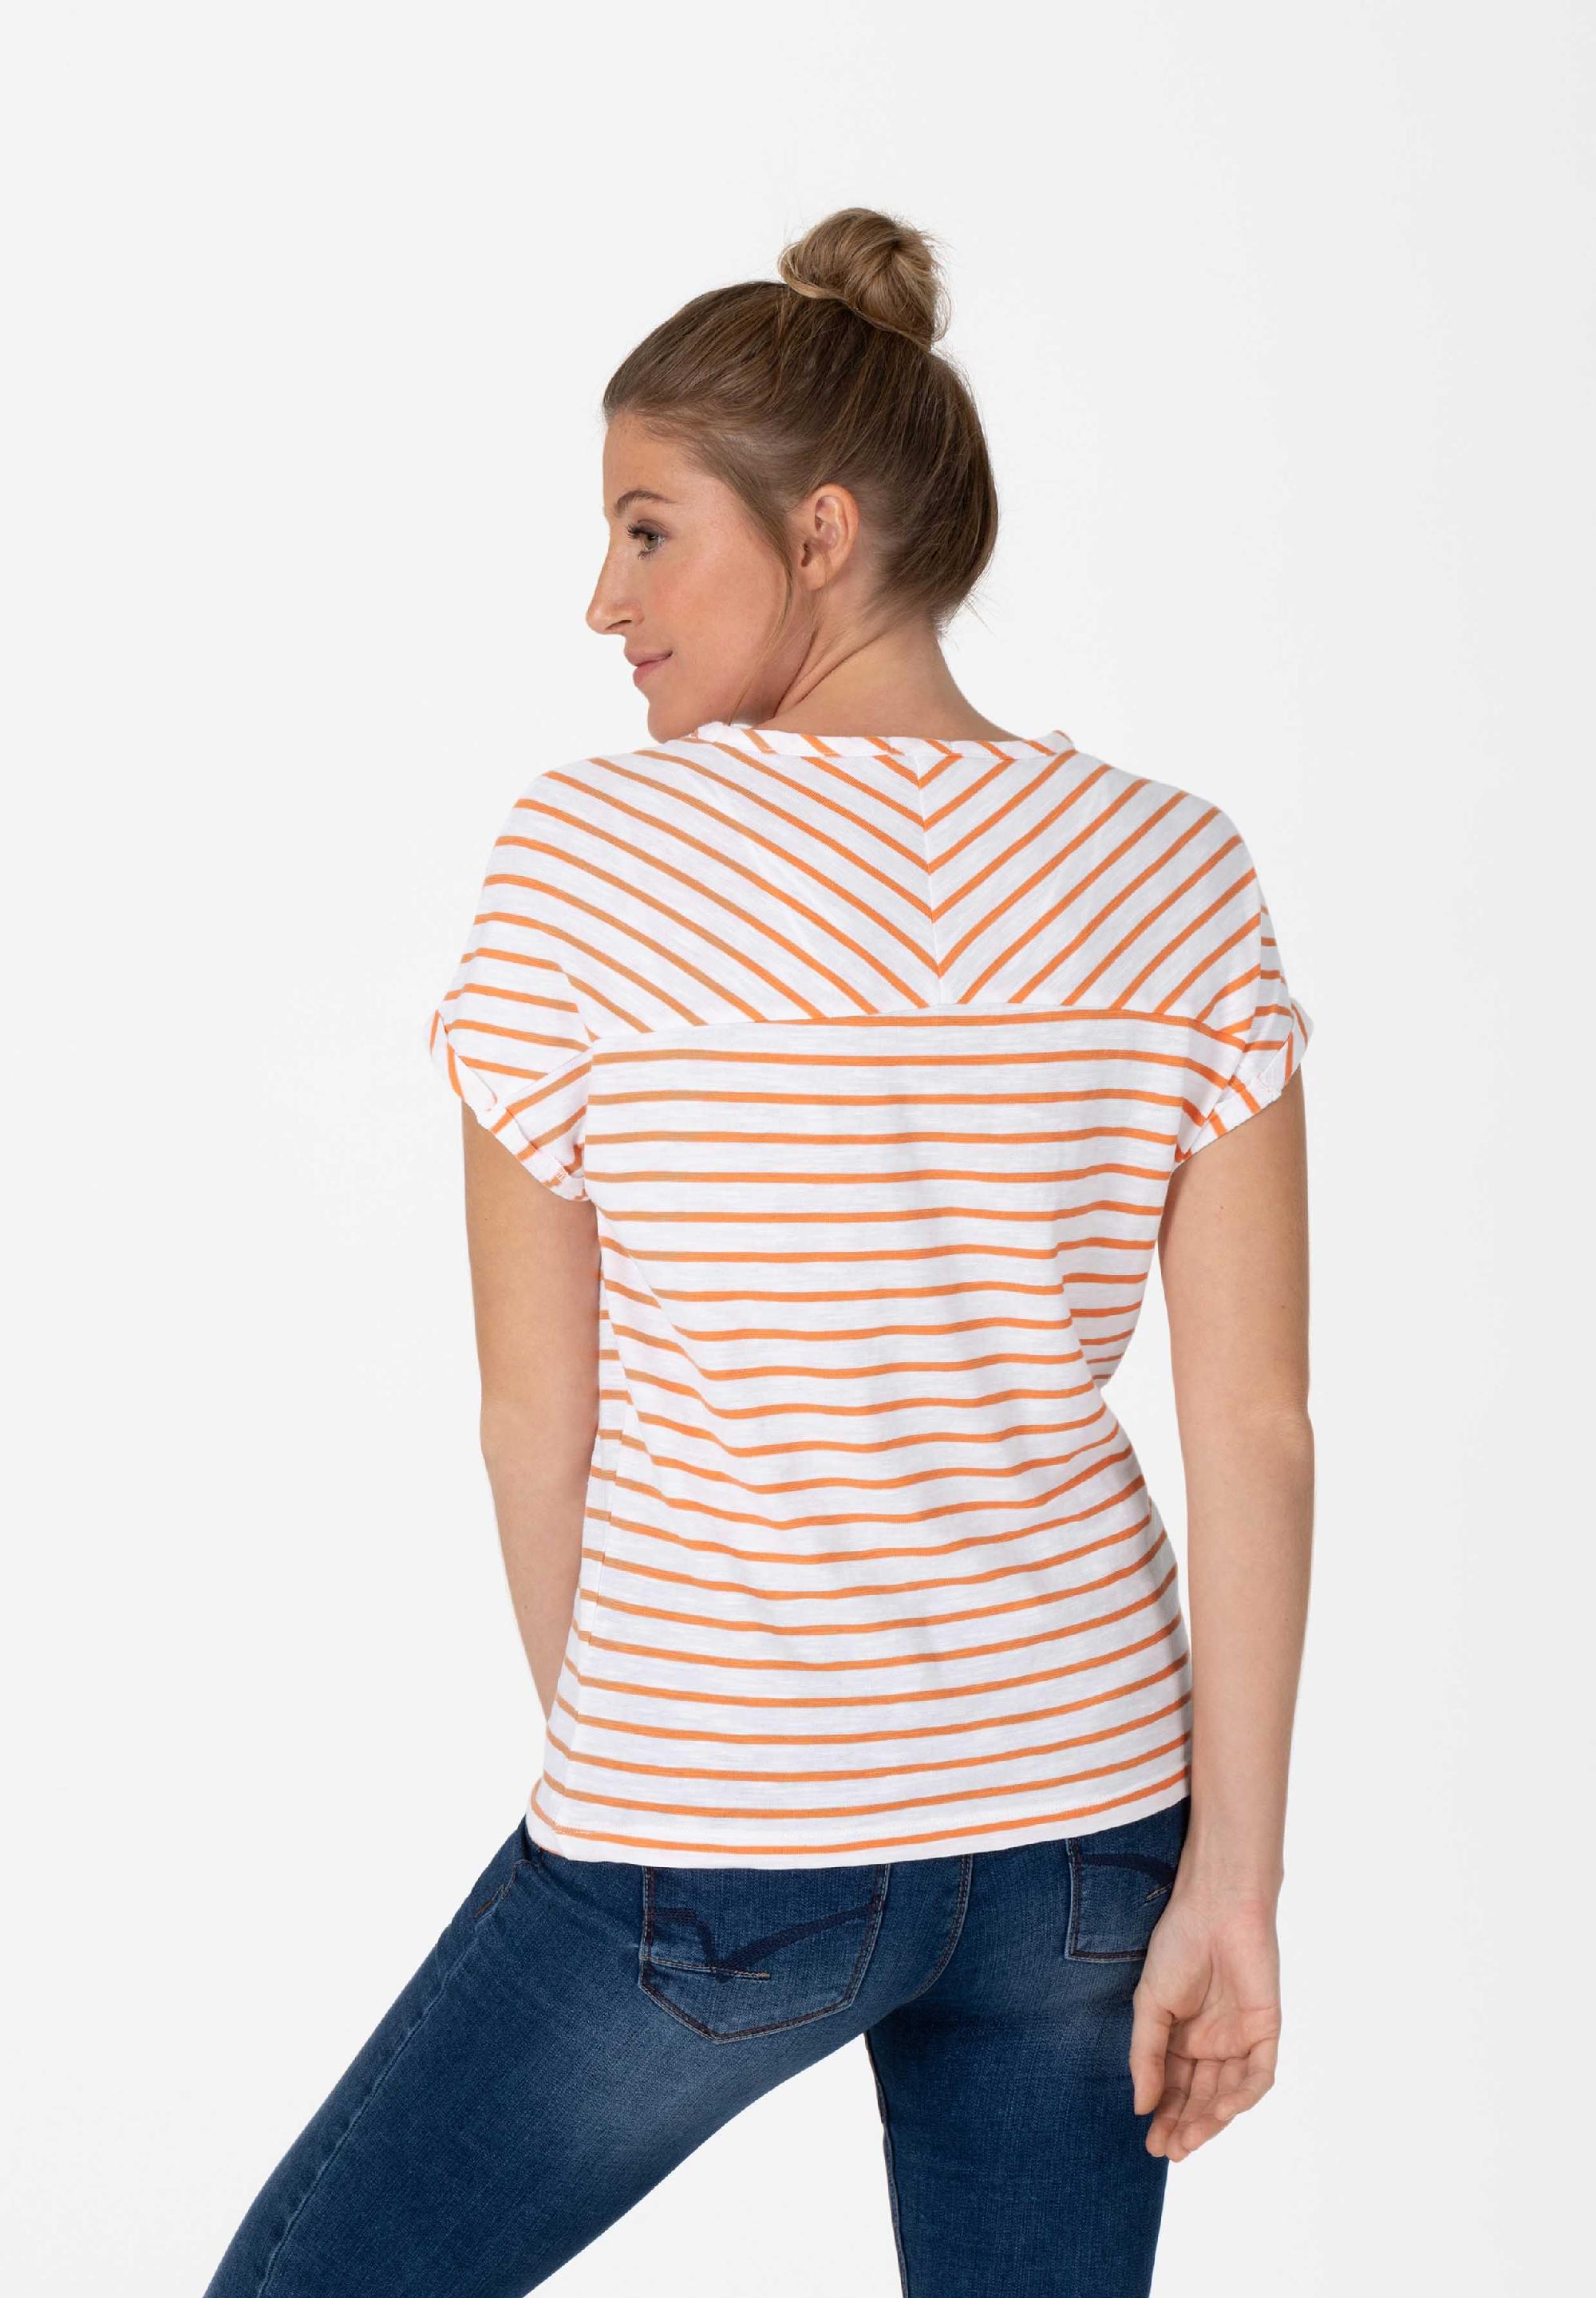 Striped T-Shirt decoration